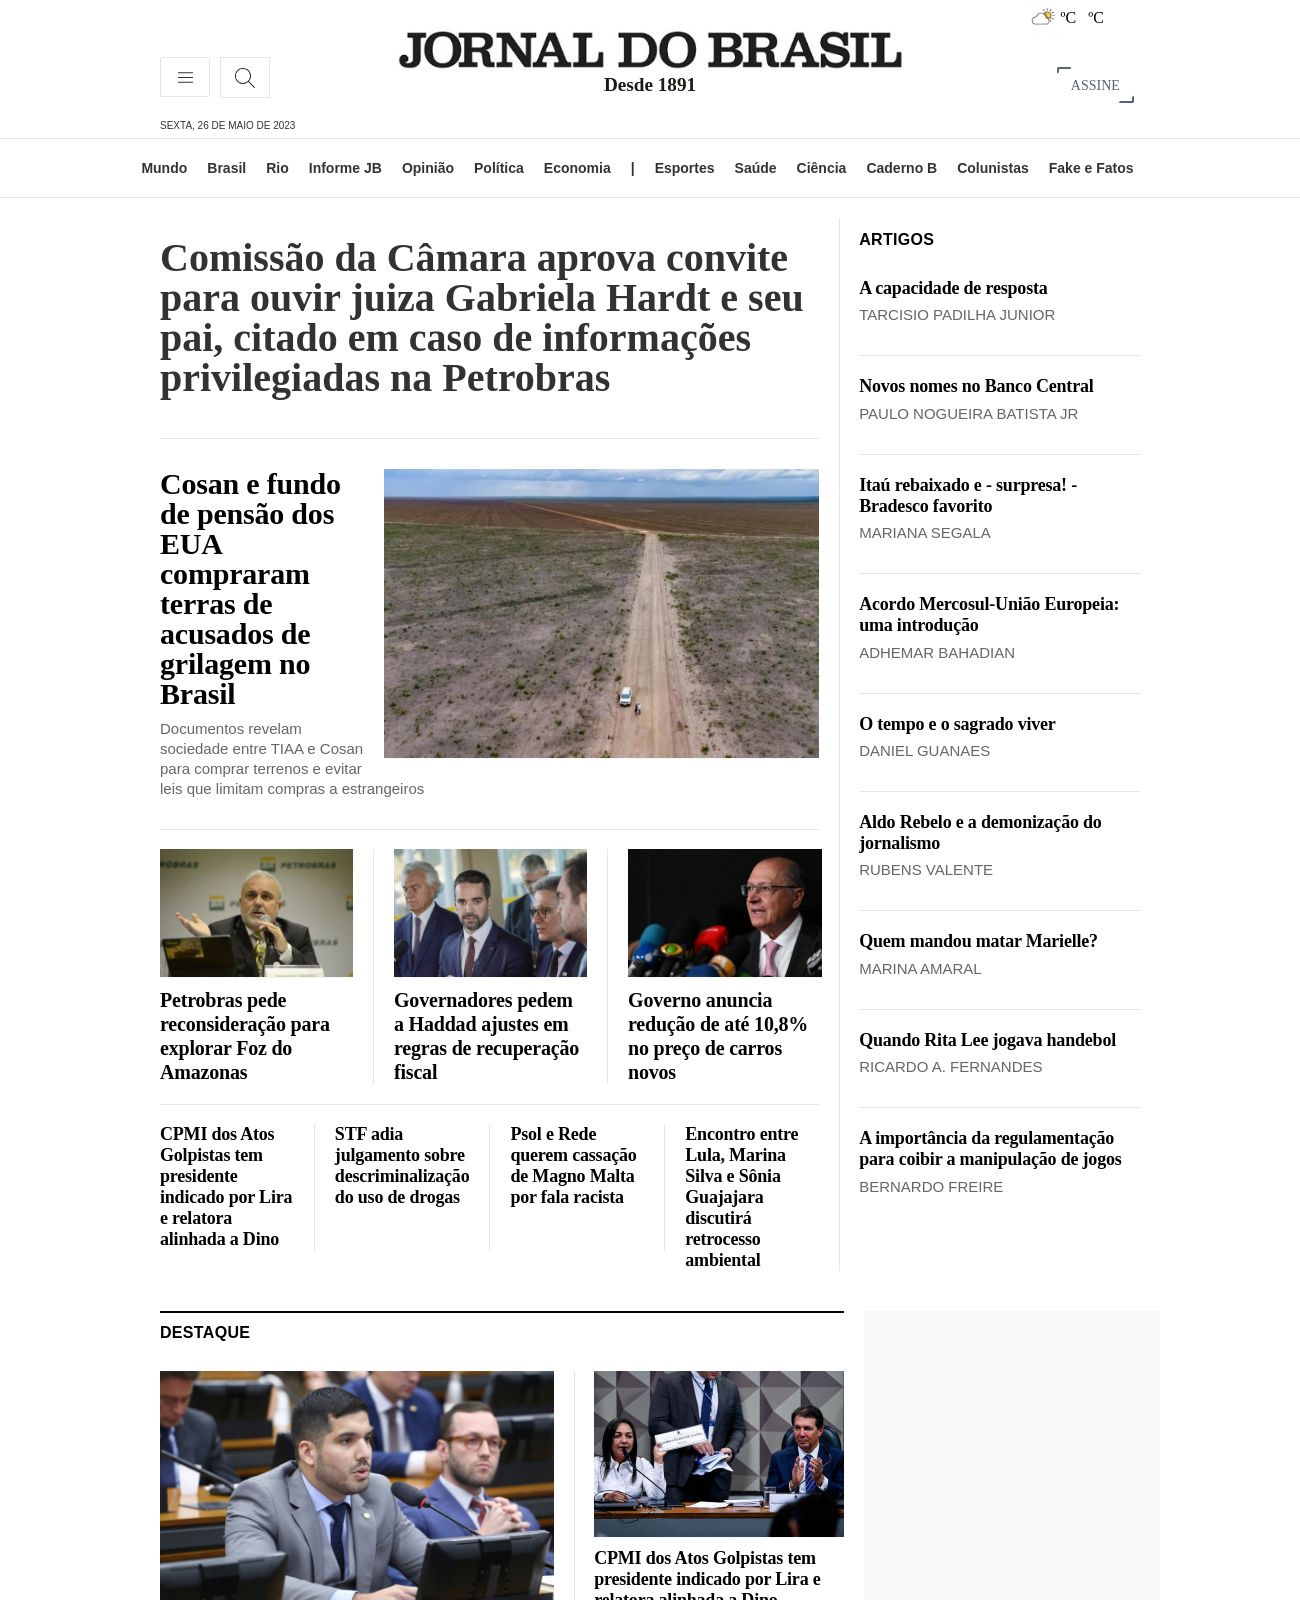 Jornal do Brasil at 2023-05-26 08:10:44-03:00 local time